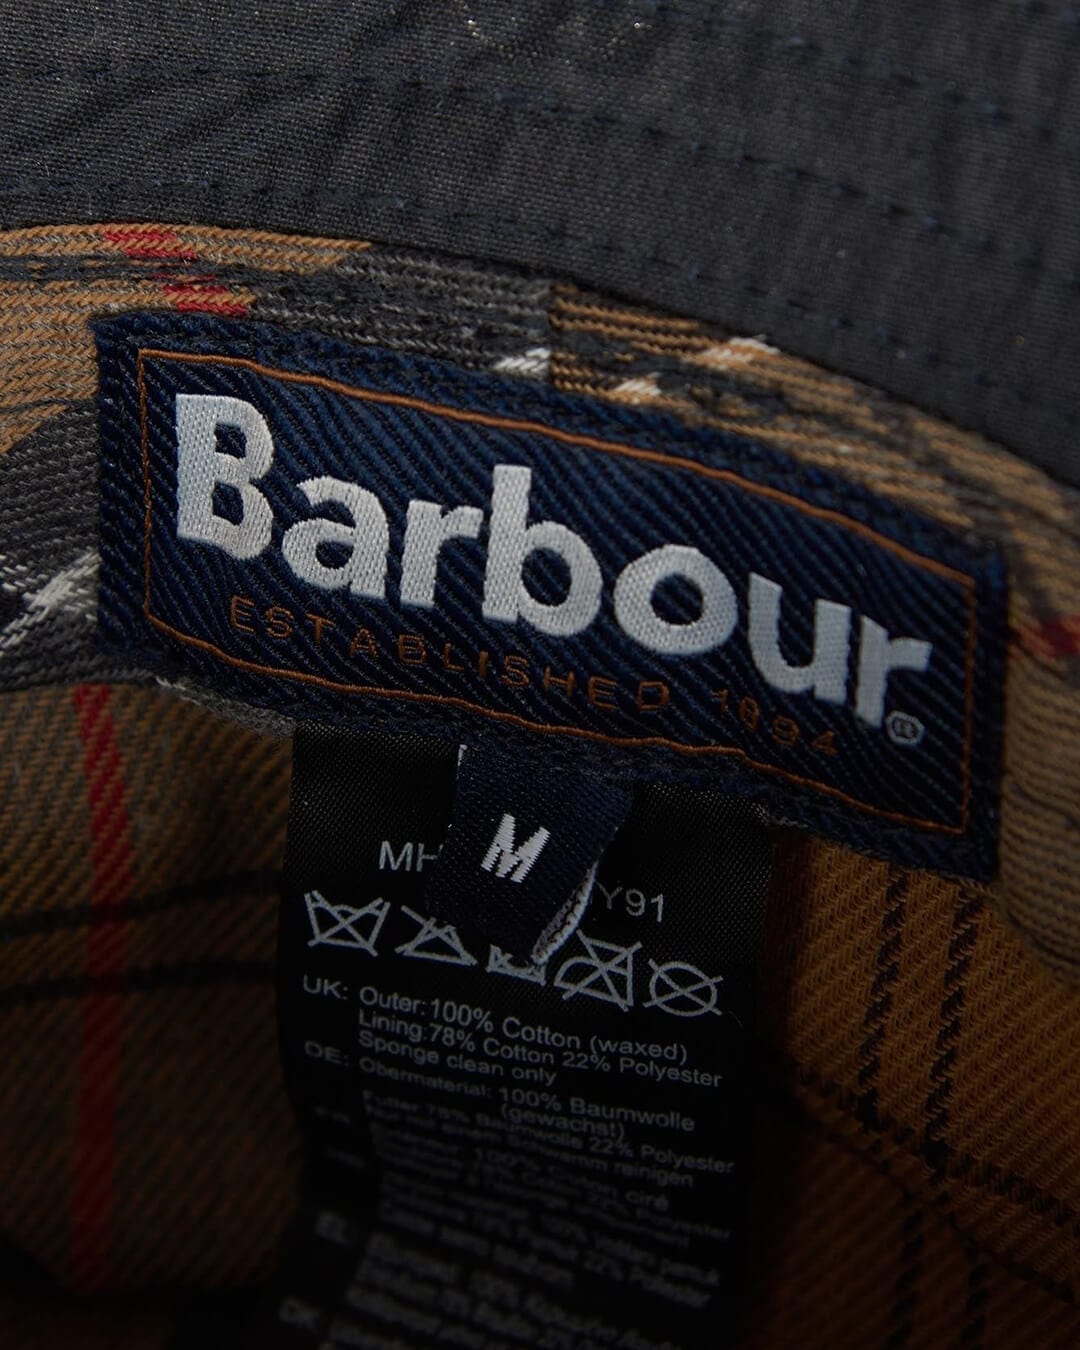 Barbour Hats Barbour Wax Navy Sports Hat